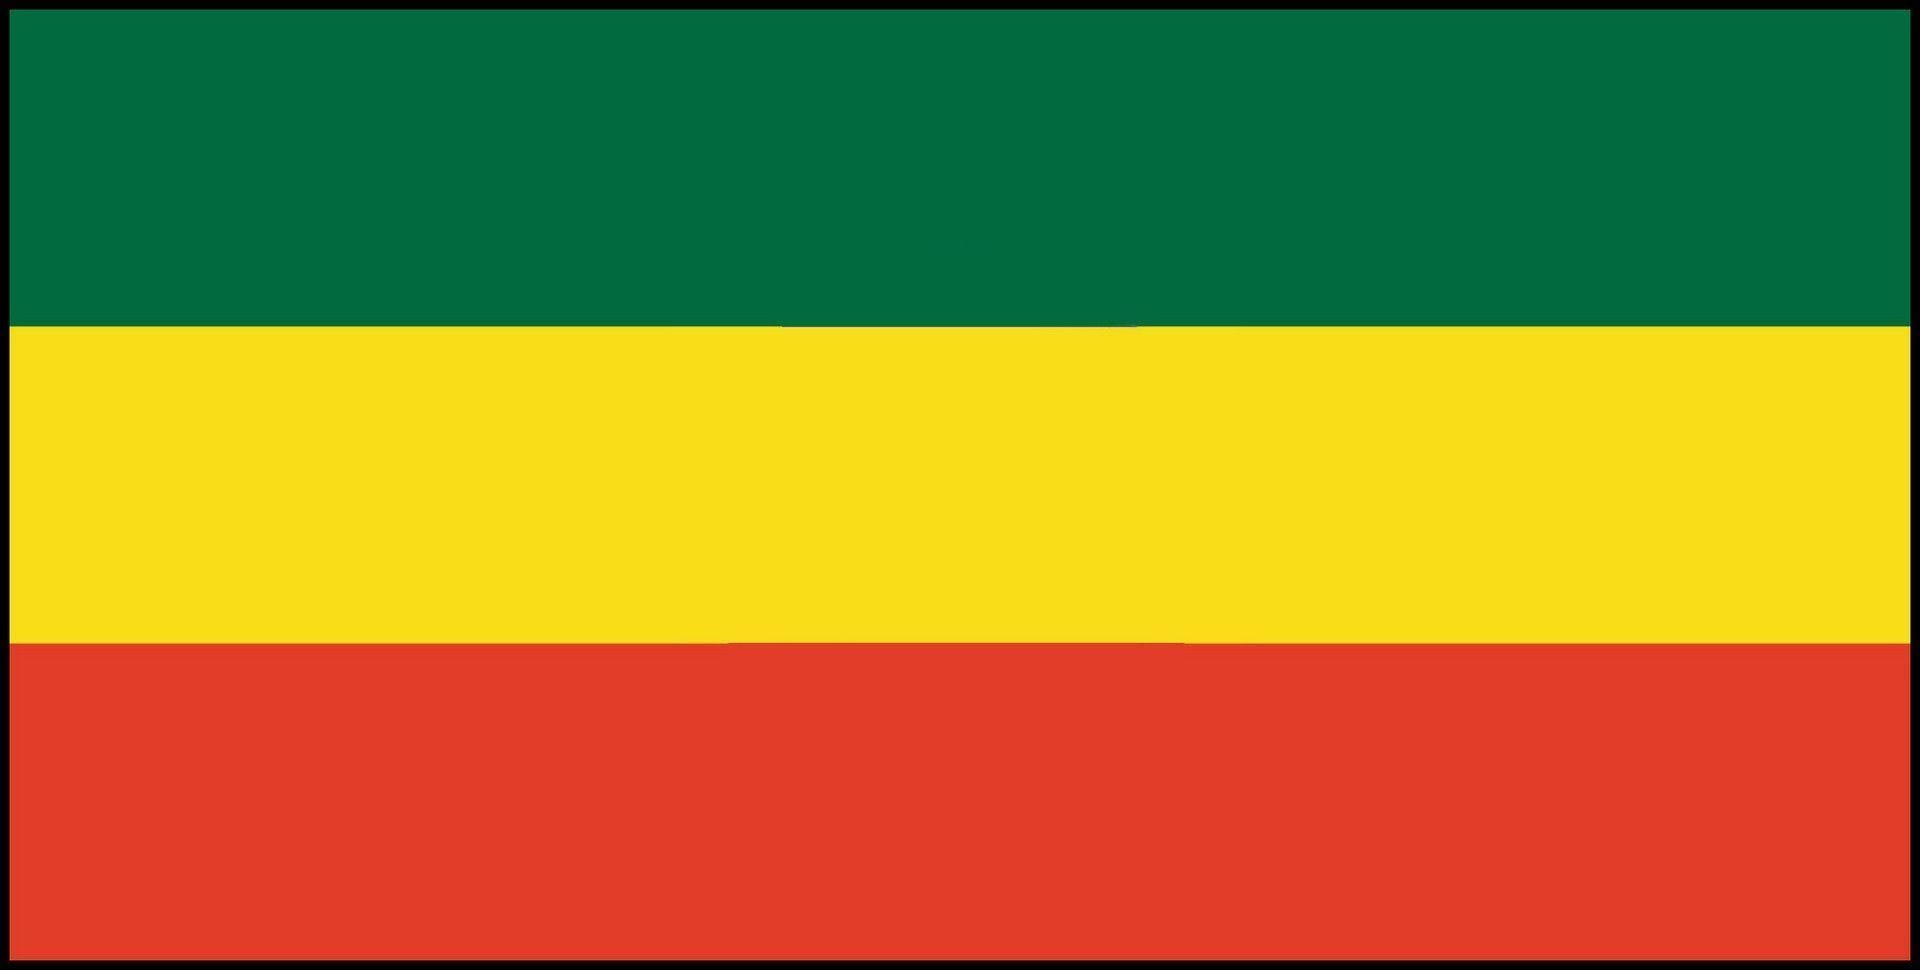 Flag of Ethiopia wallpaper